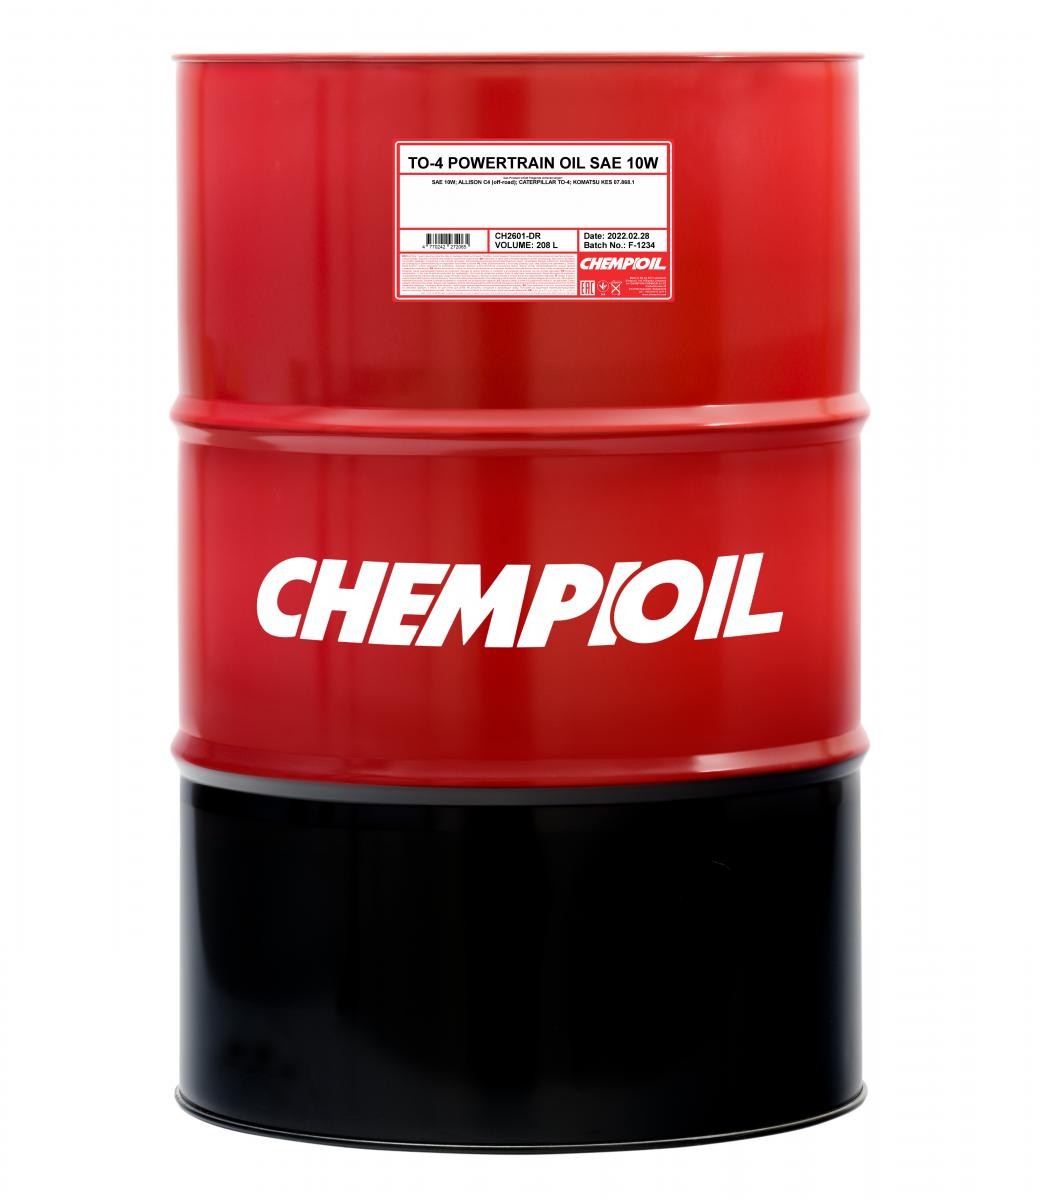 Olio motore CH2601-DR CHEMPIOIL SAE 10 KOMATSU KES 07.868.1 POWERTRAIN OIL, TO-4